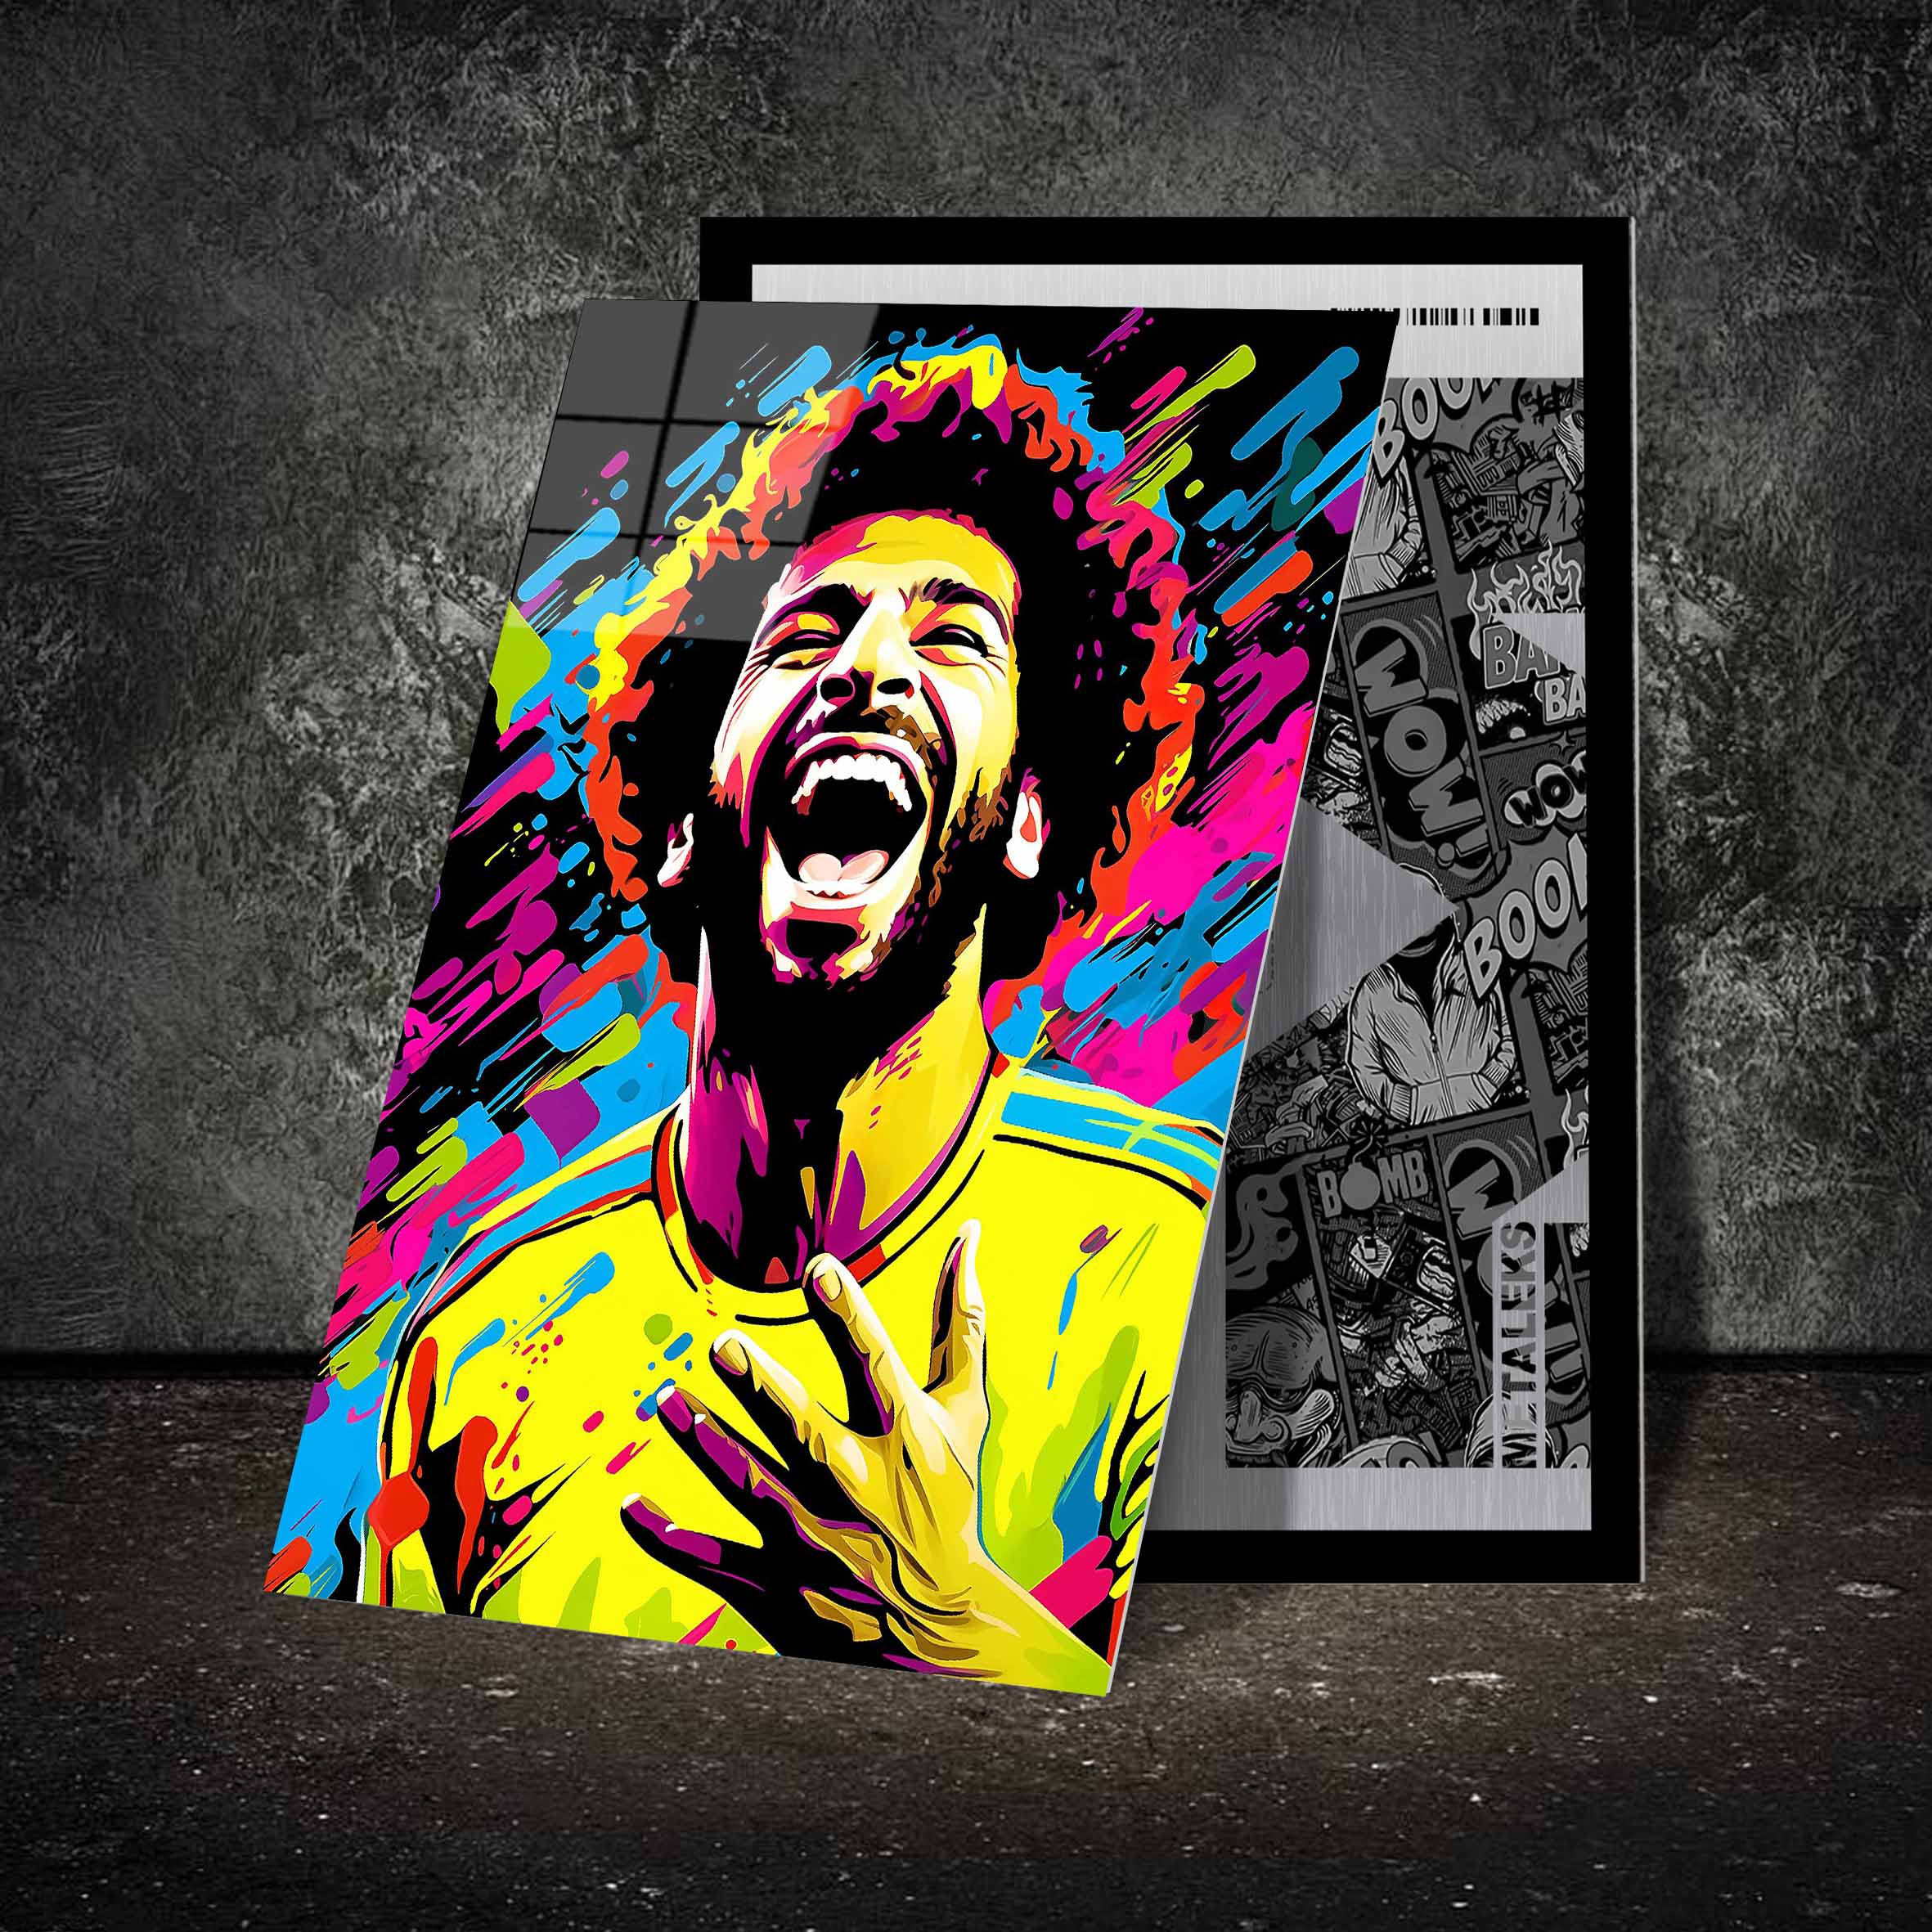 Mohamed Salah Football Player-designed by @WATON CORET